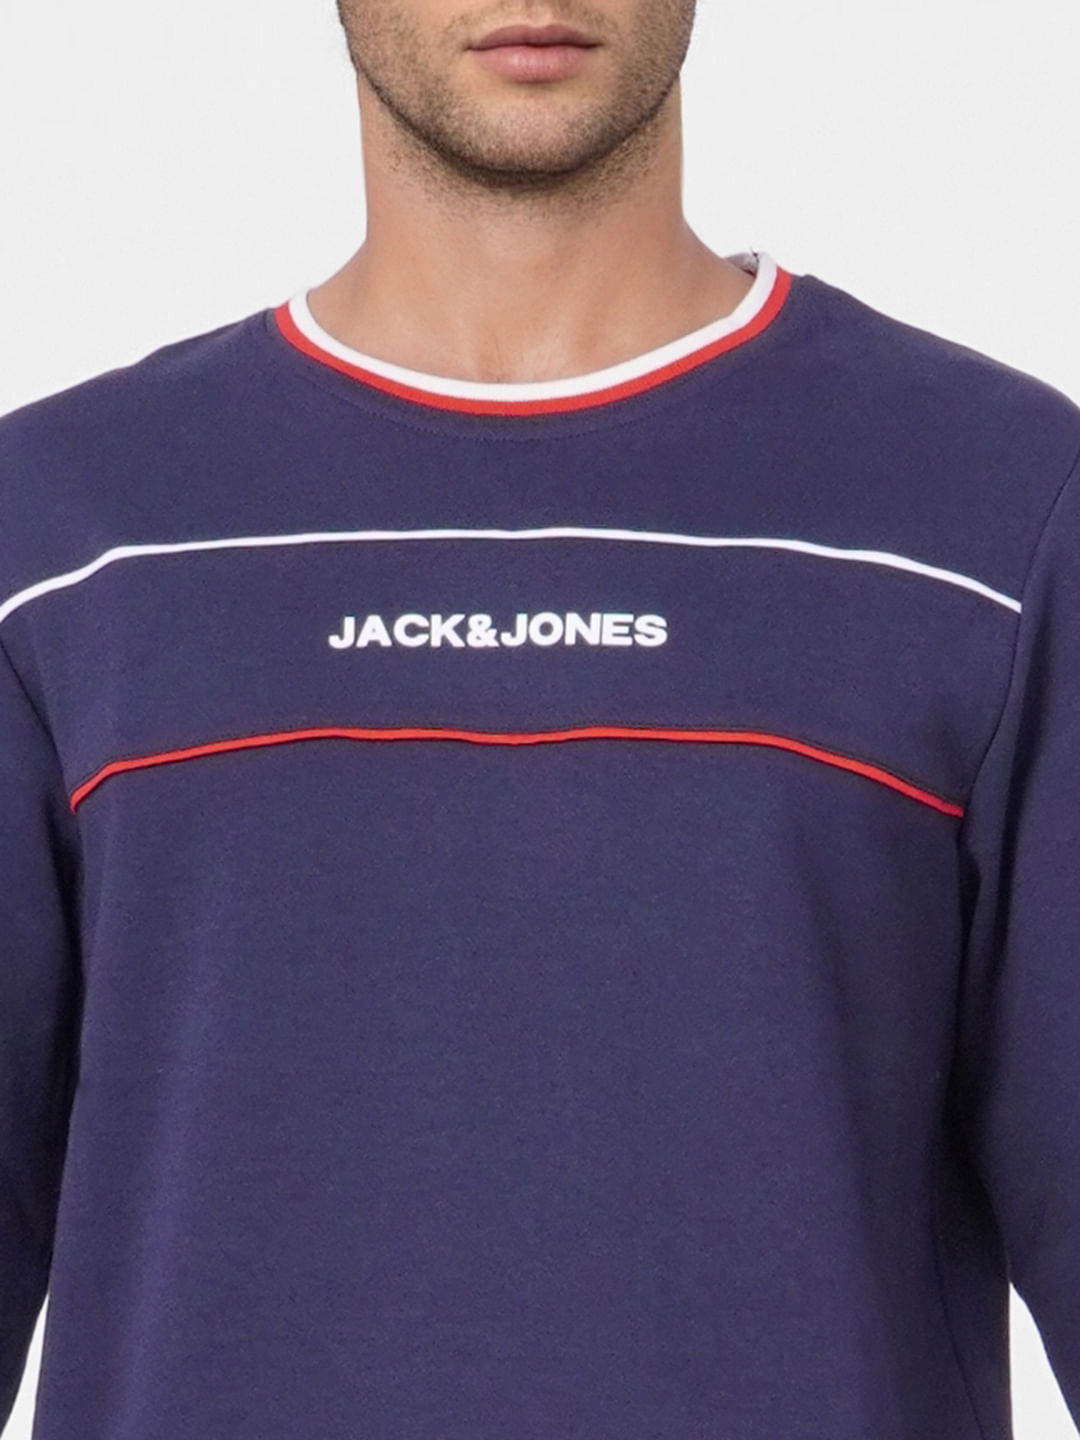 Purple M Jack & Jones sweatshirt discount 85% MEN FASHION Jumpers & Sweatshirts Hoodless 